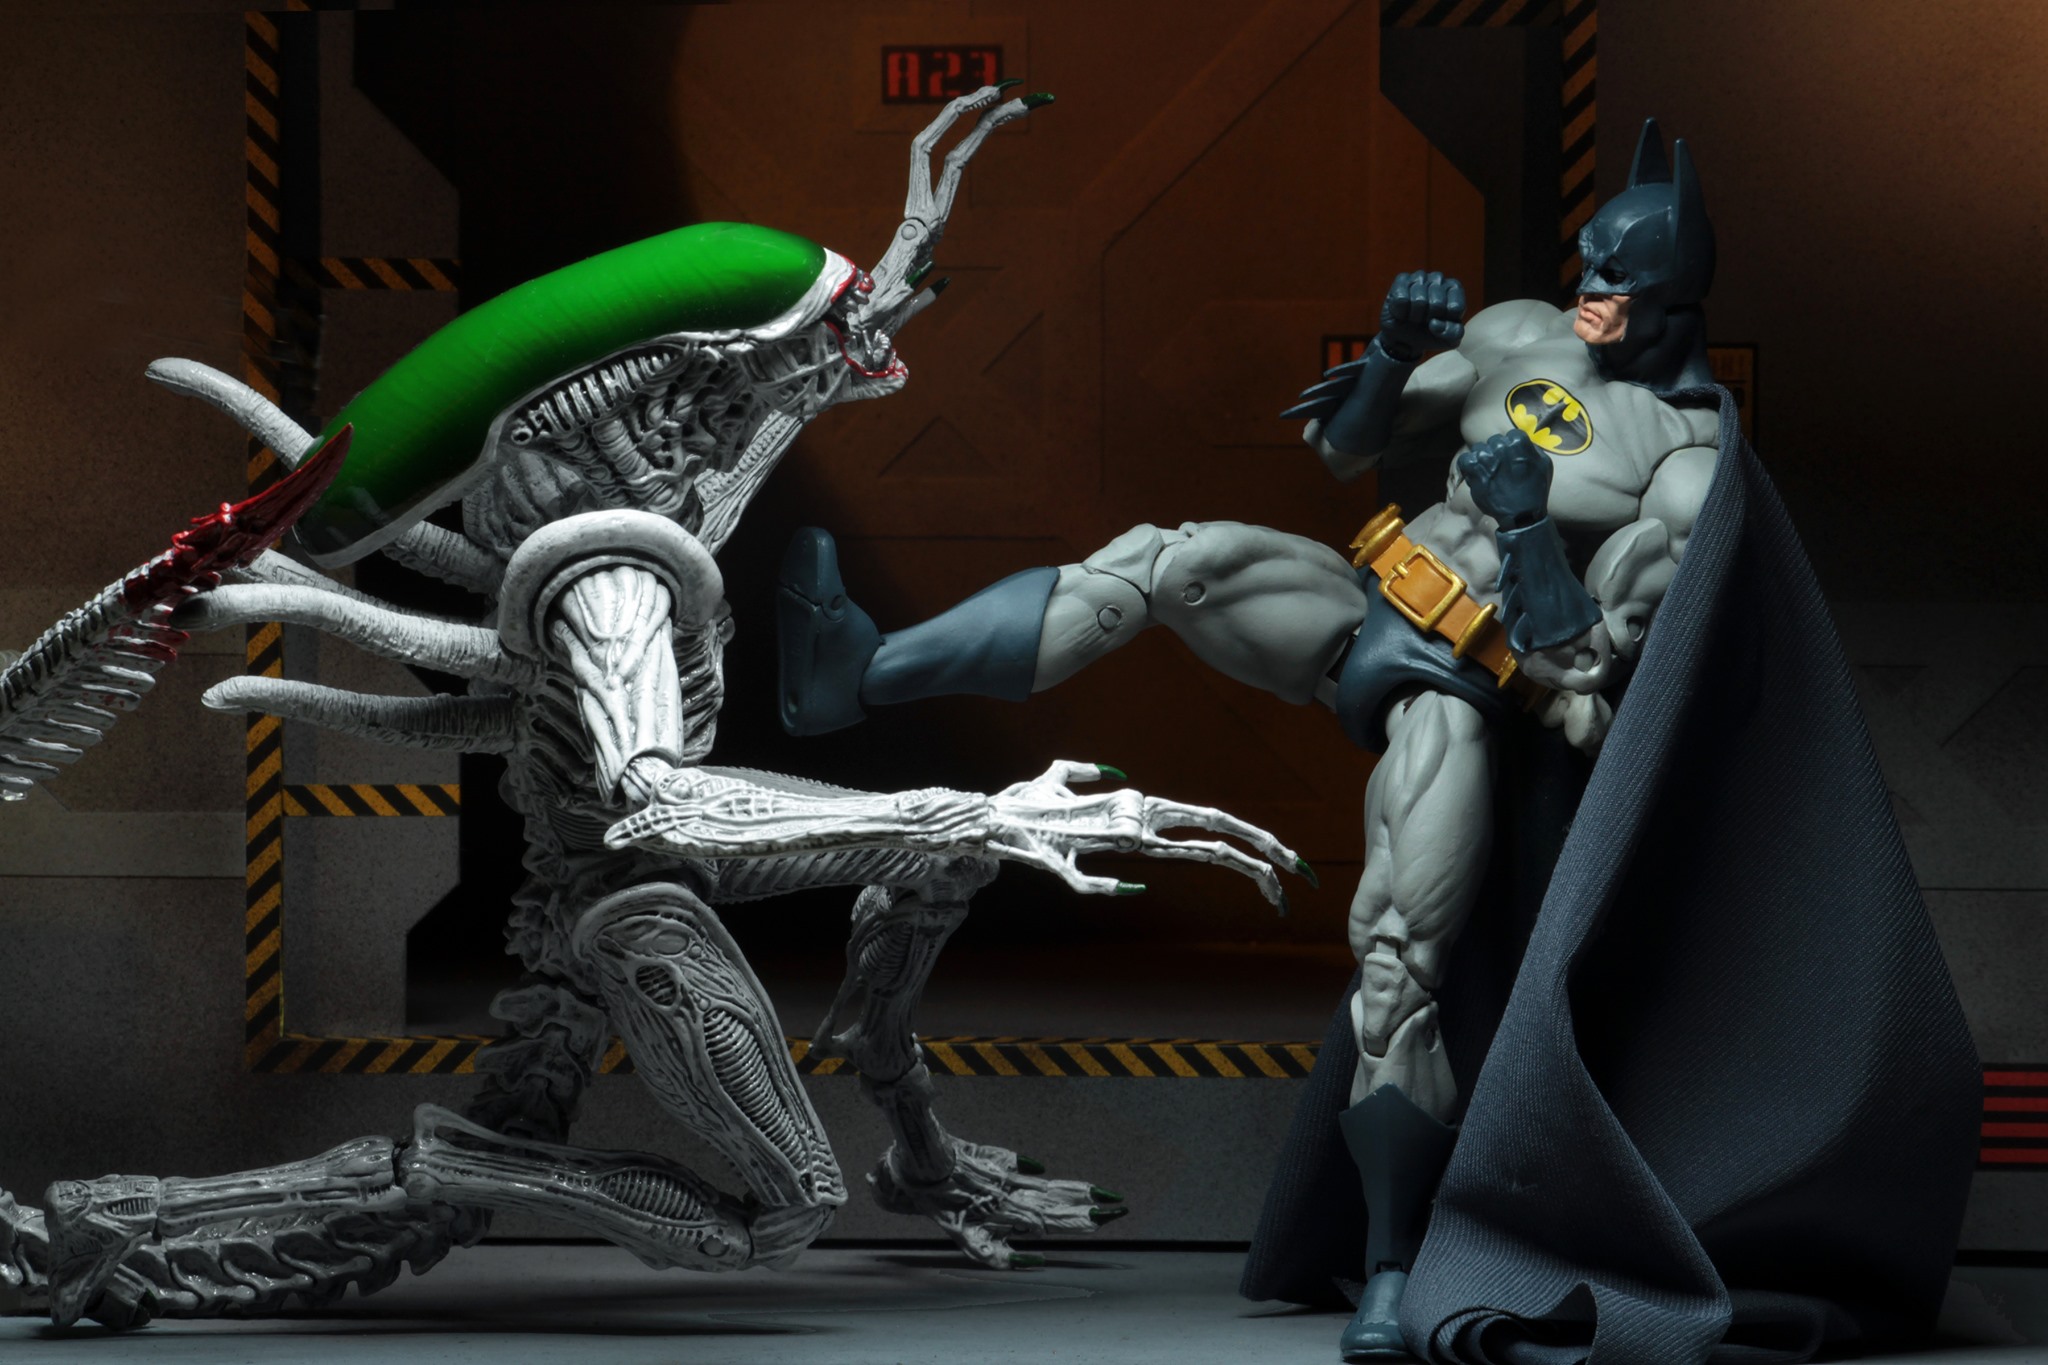 NYCC 2019: NECA Batman vs Joker Alien Exclusive - The Batman Universe